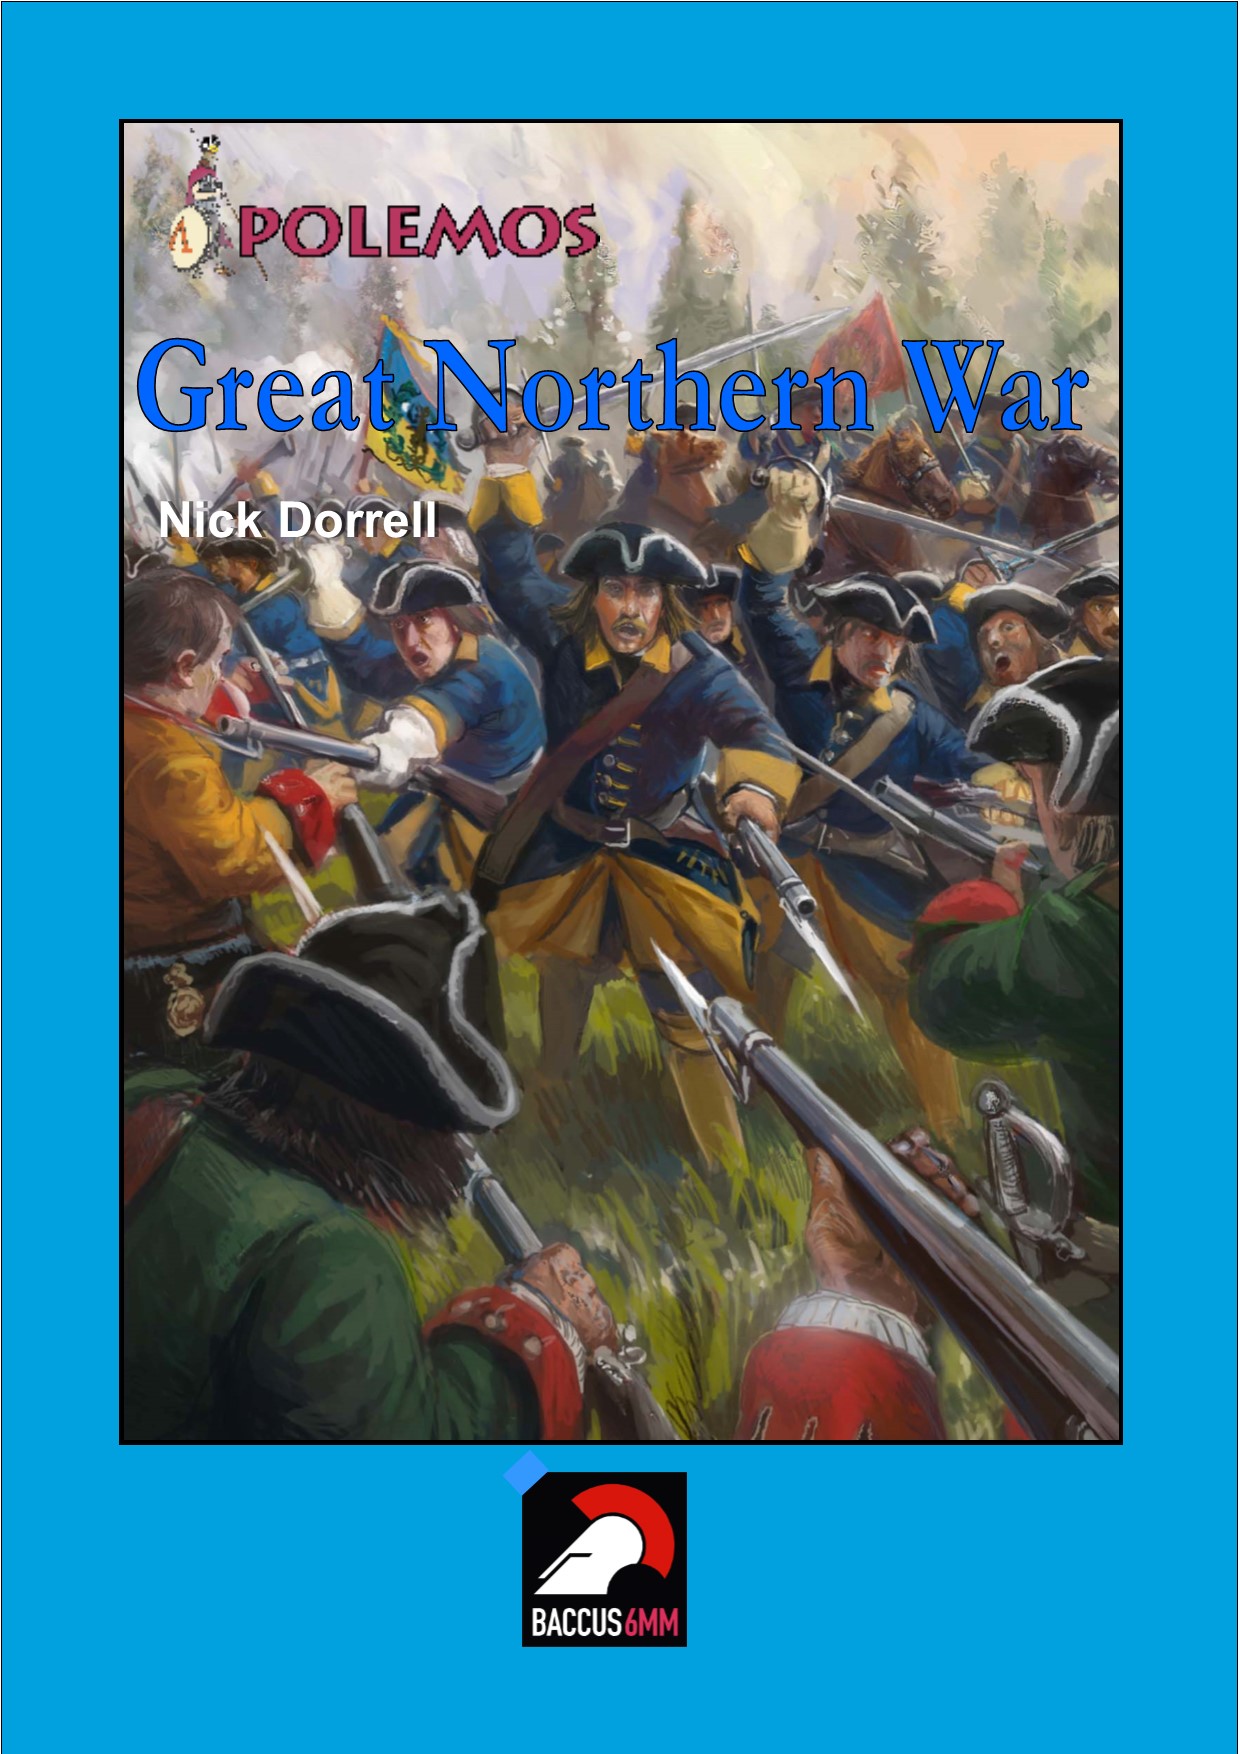 6mm Great Northern War Swedish Army